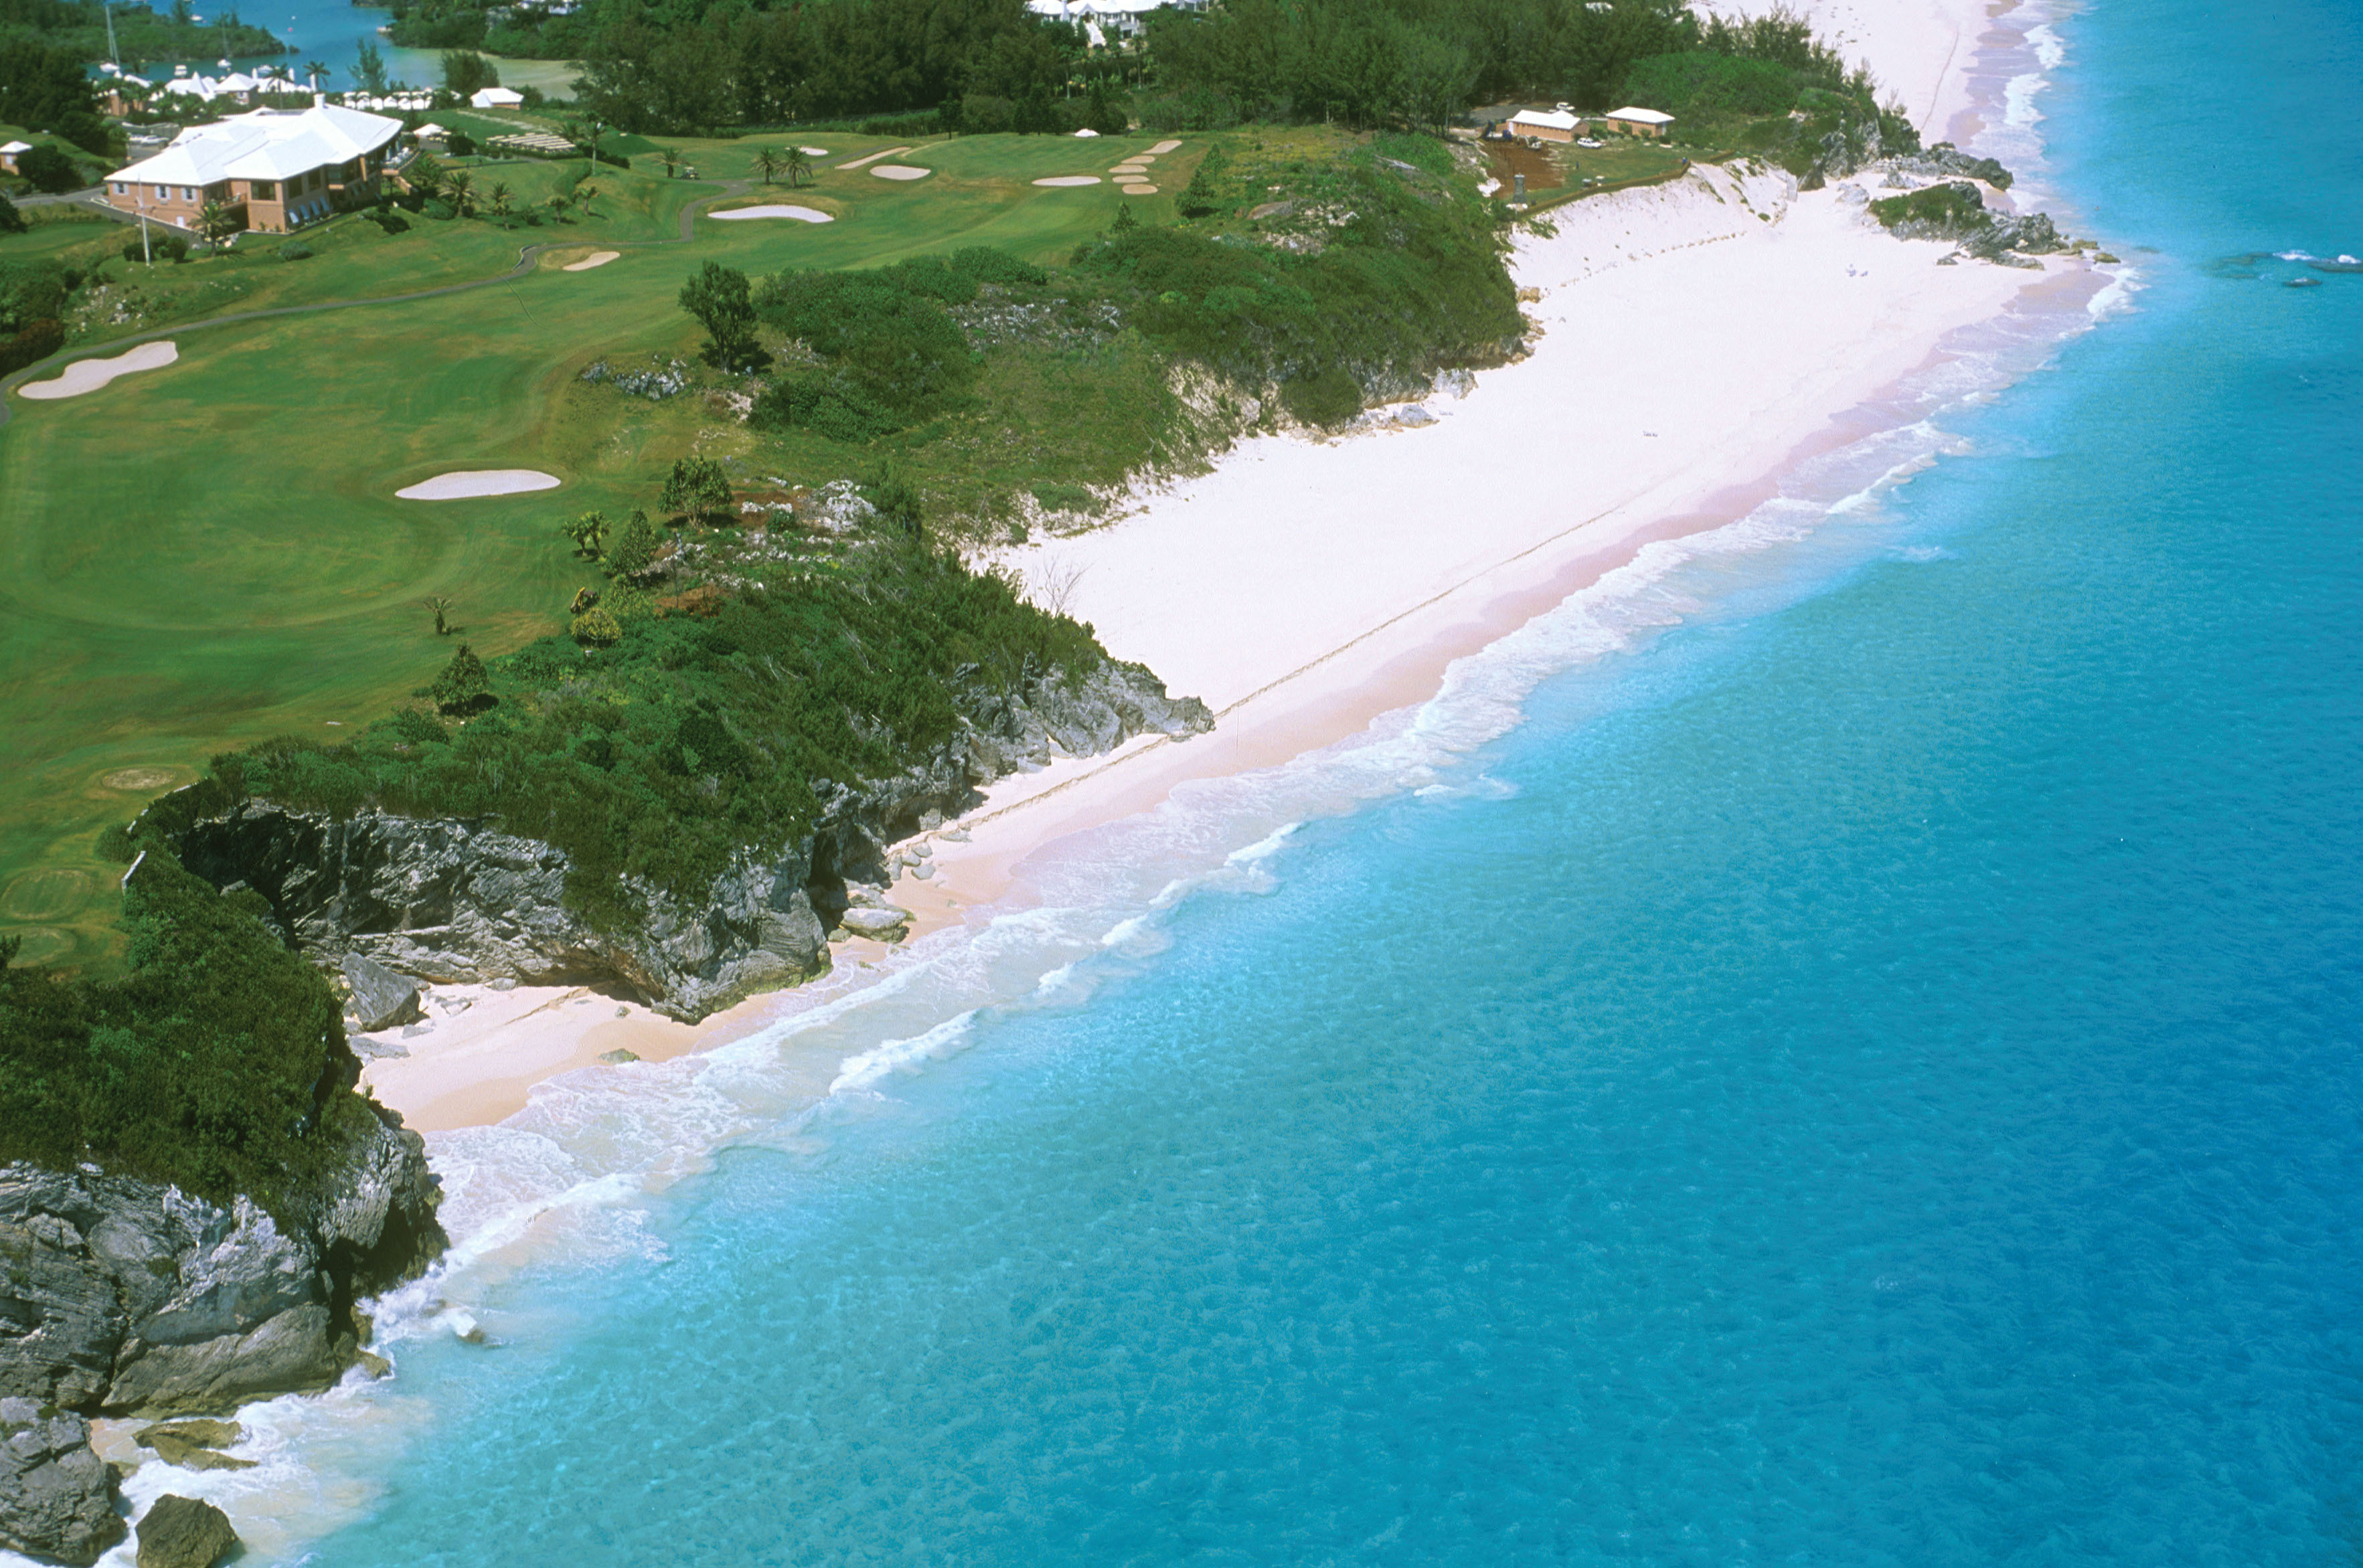 Bermuda has stunning stretches of coastline